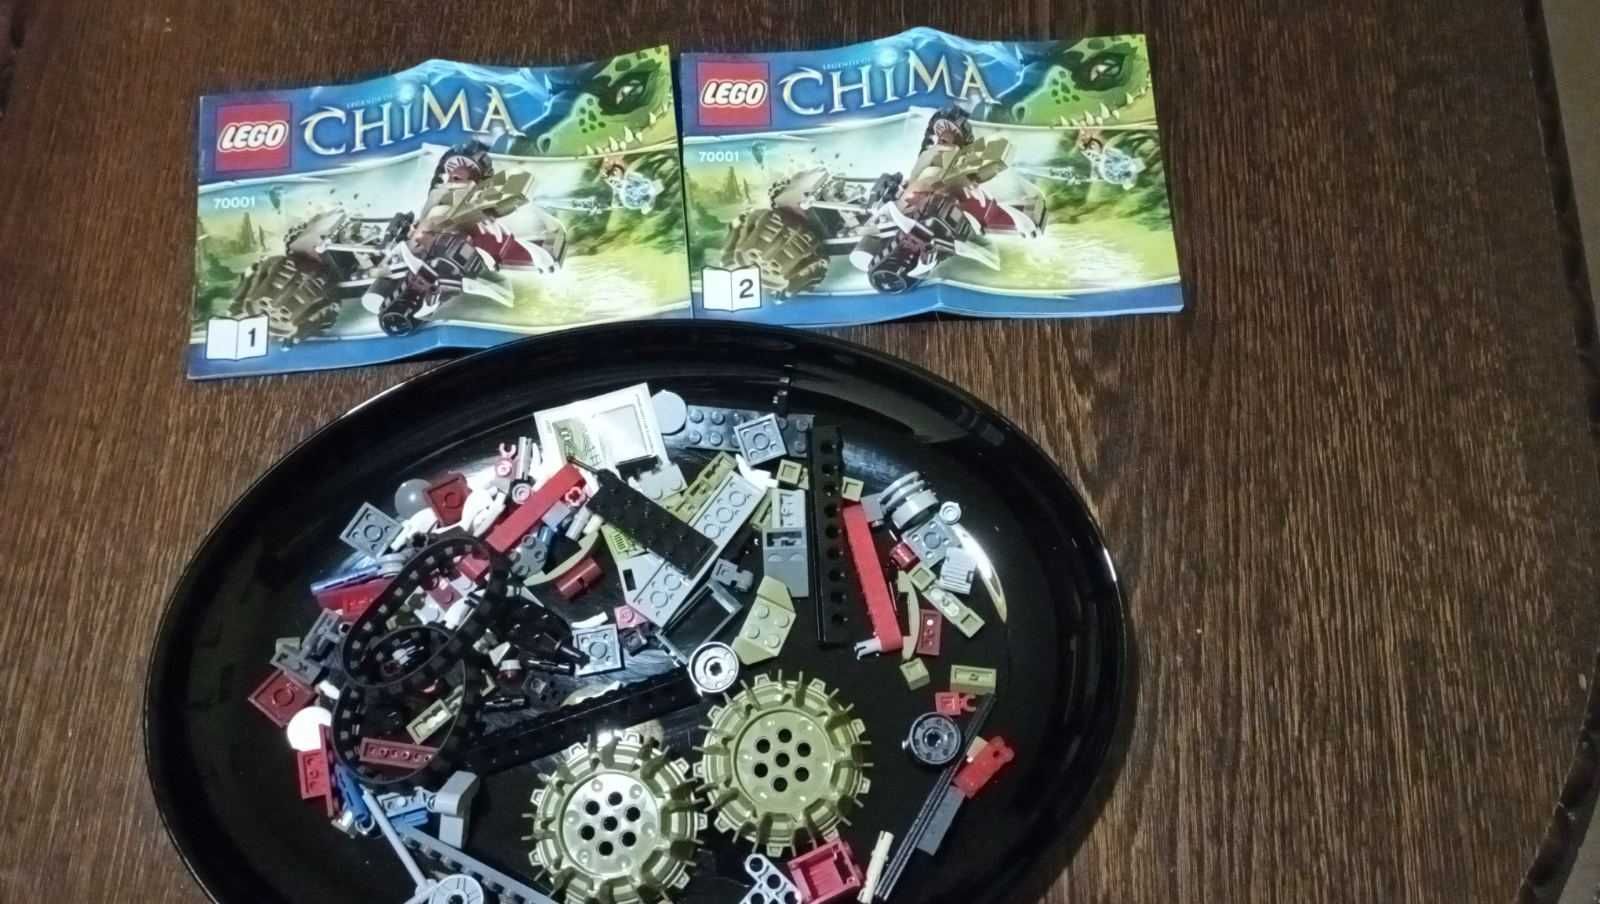 Lego chima 70001, 76158, 70420